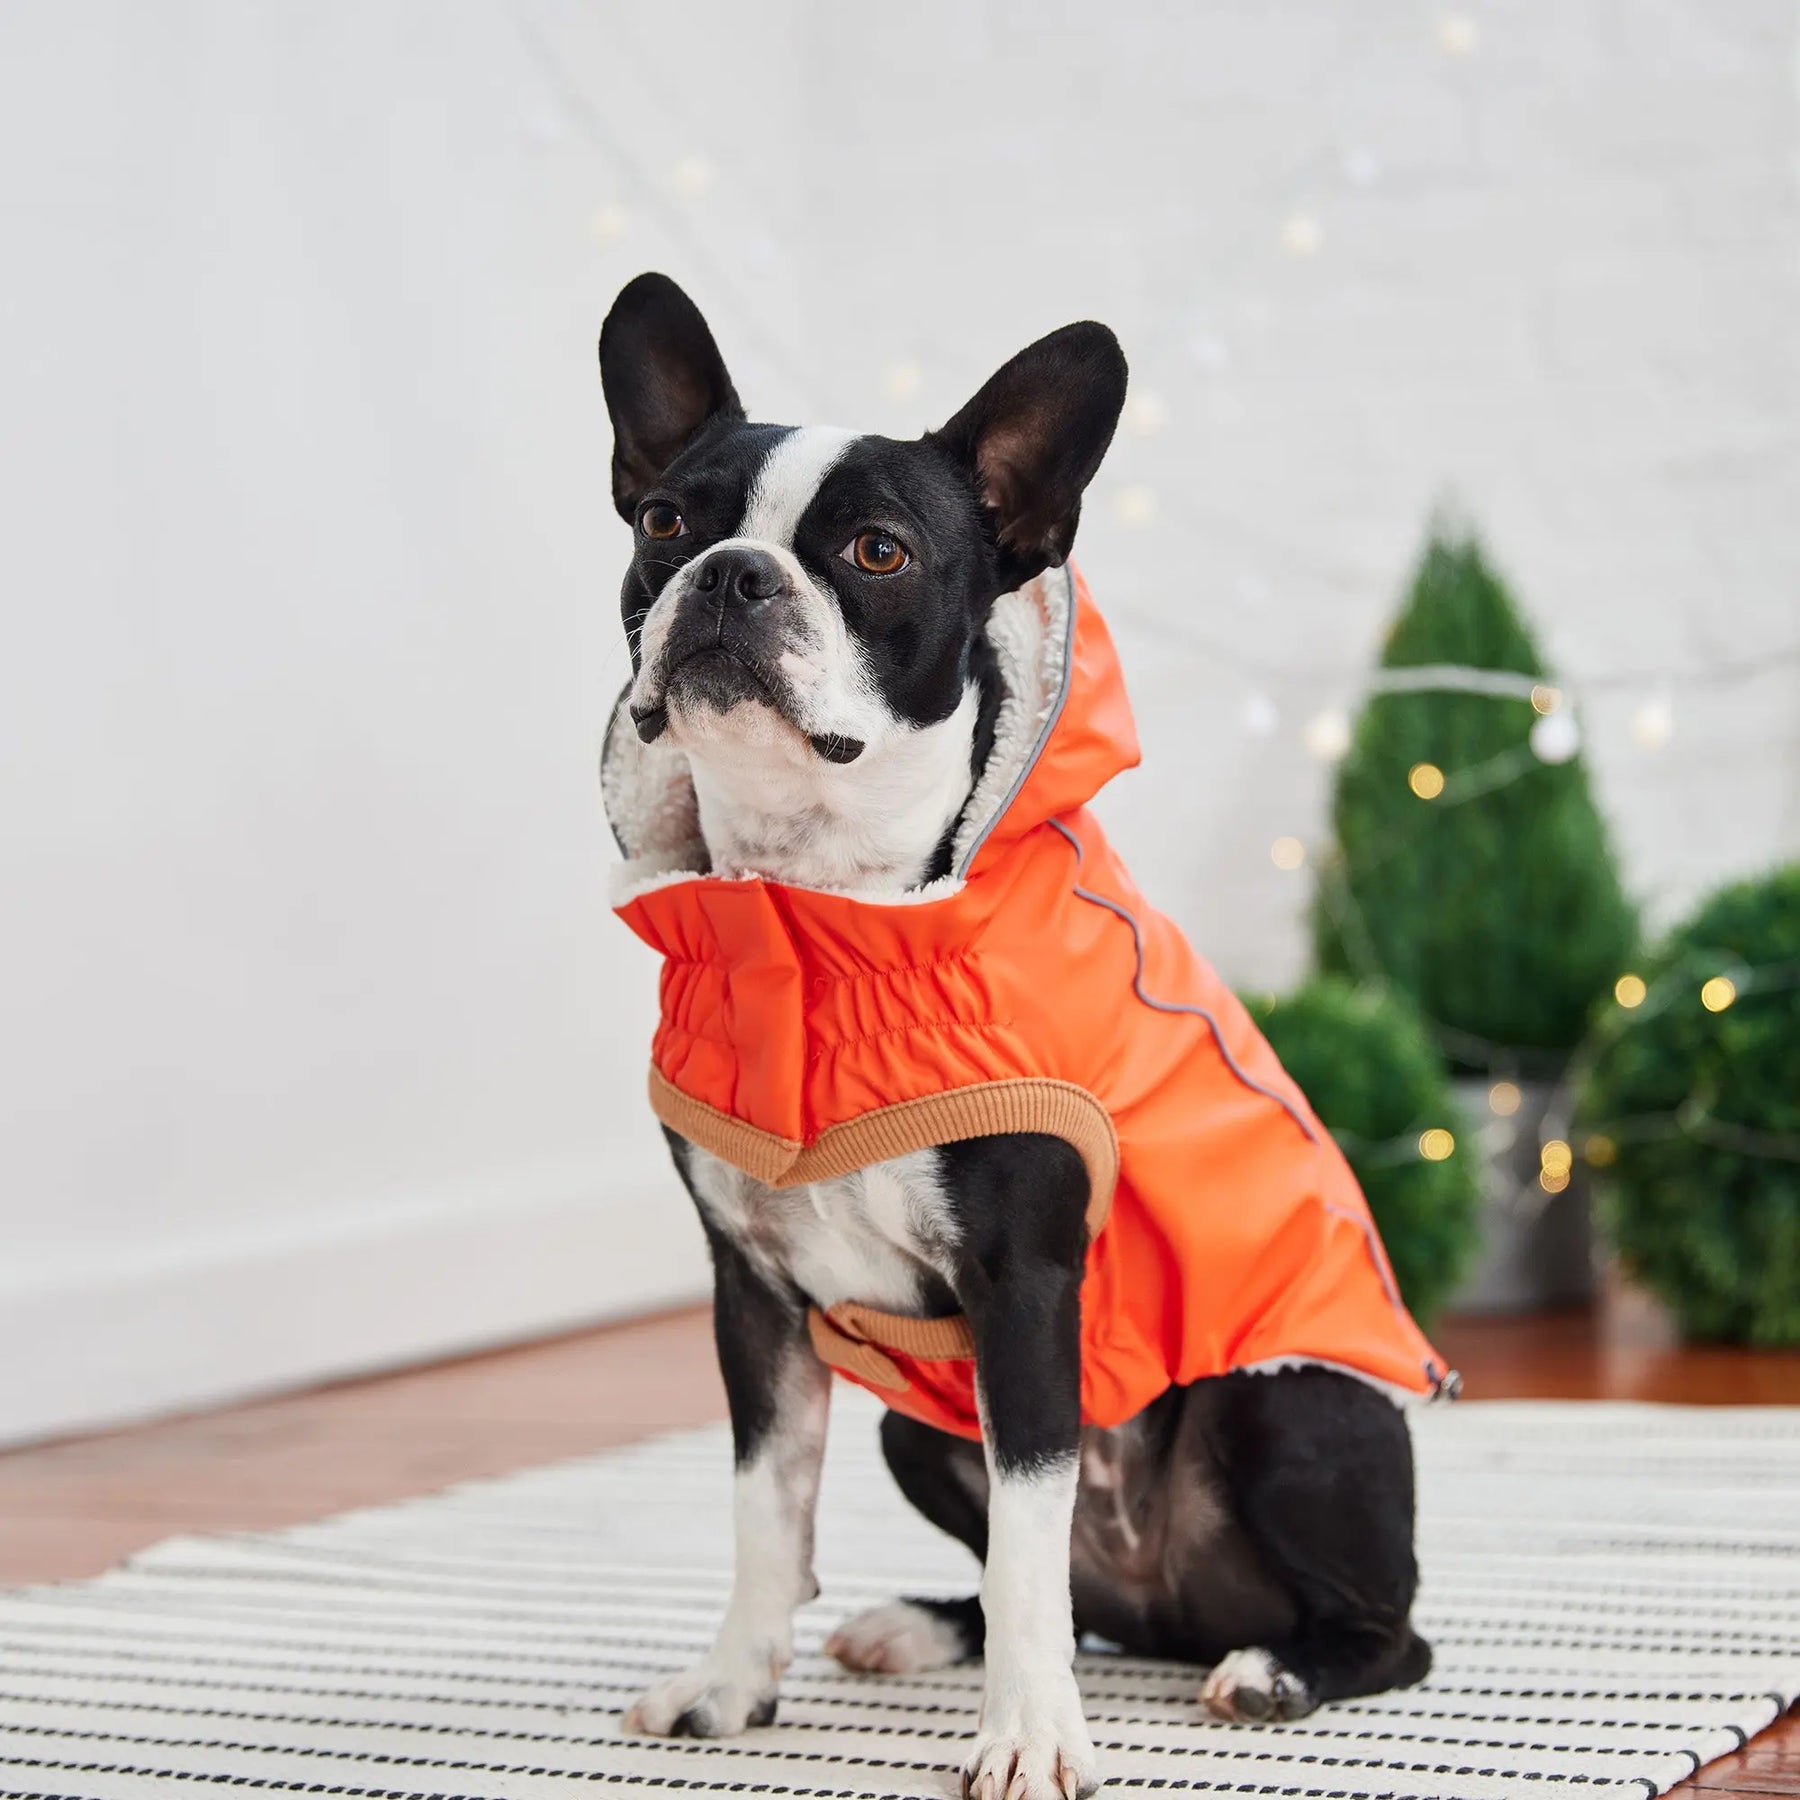 Insulated Dog Raincoat | Orange GF PET Apparel GF Pet Official Online Store